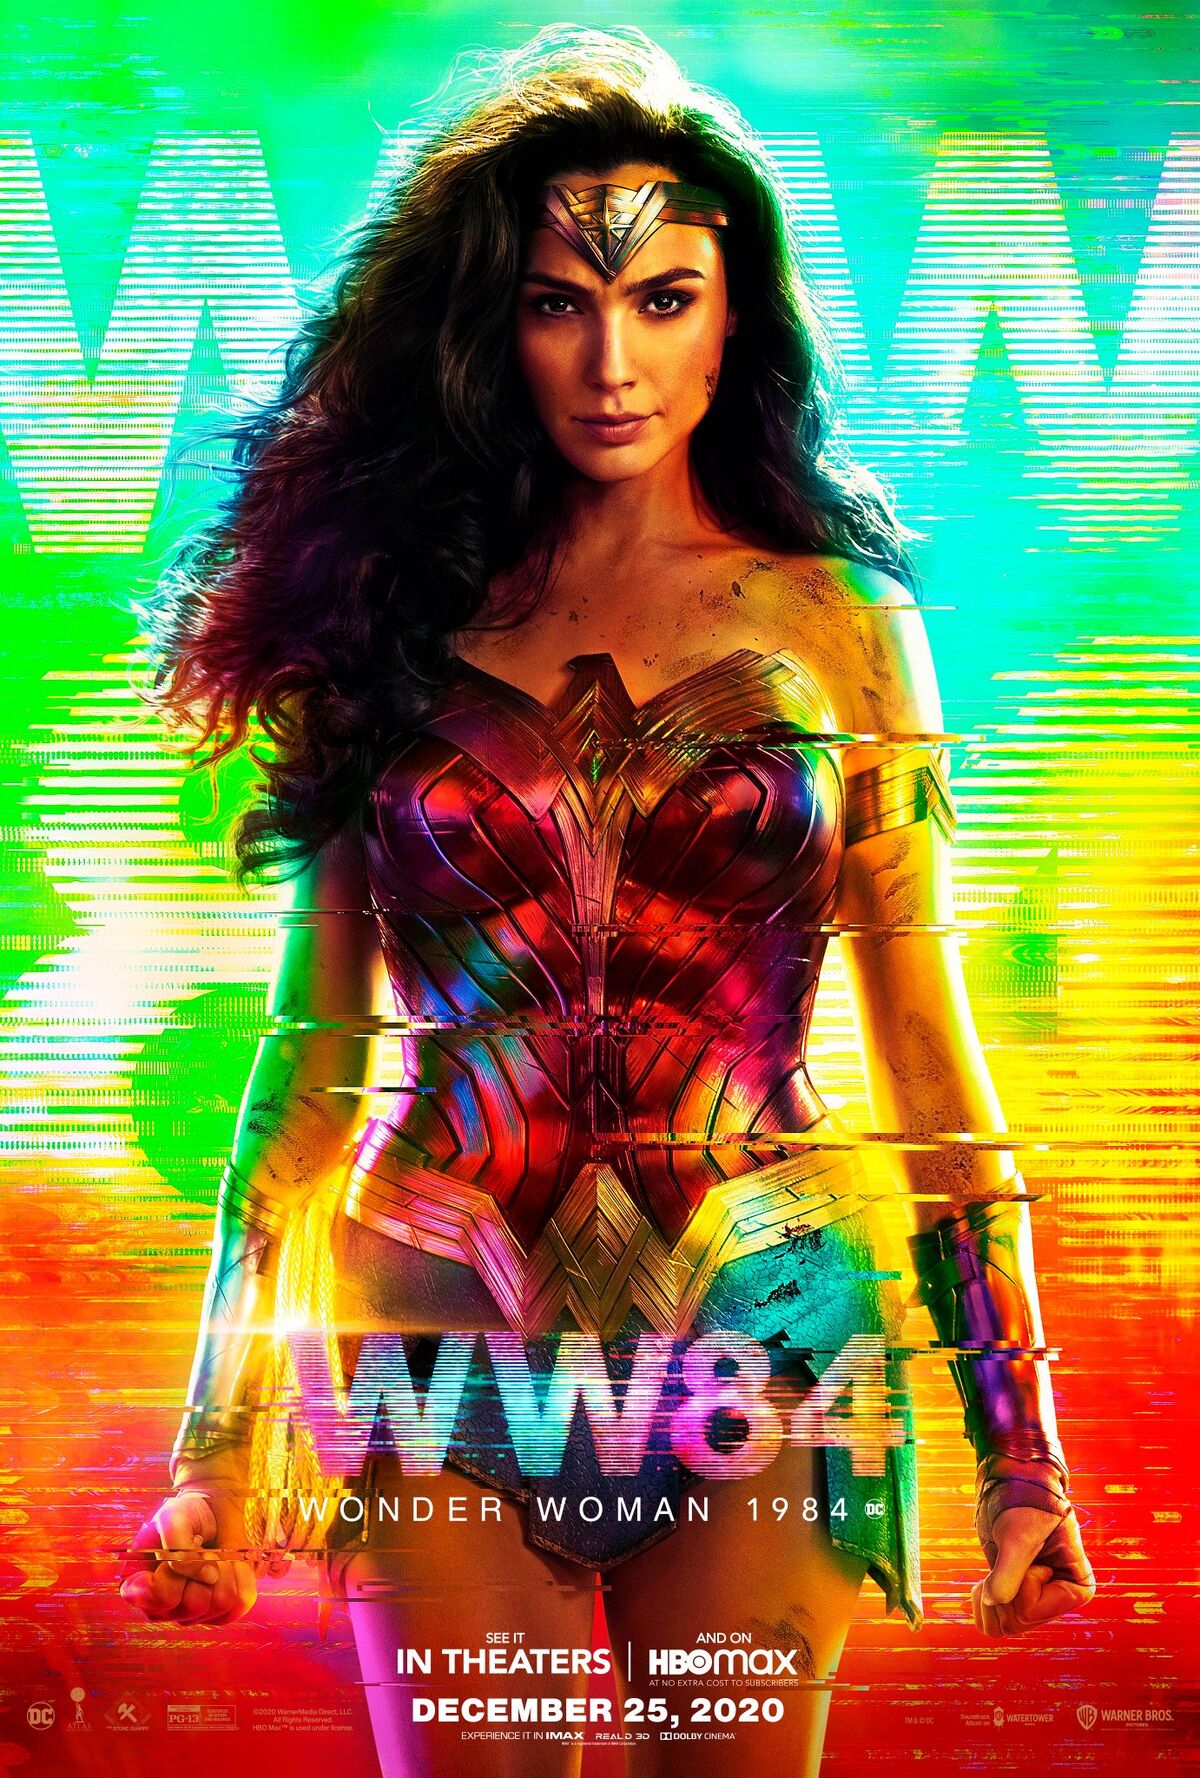 Wonder Woman 1984 on X: The cast of #WonderWoman represents the